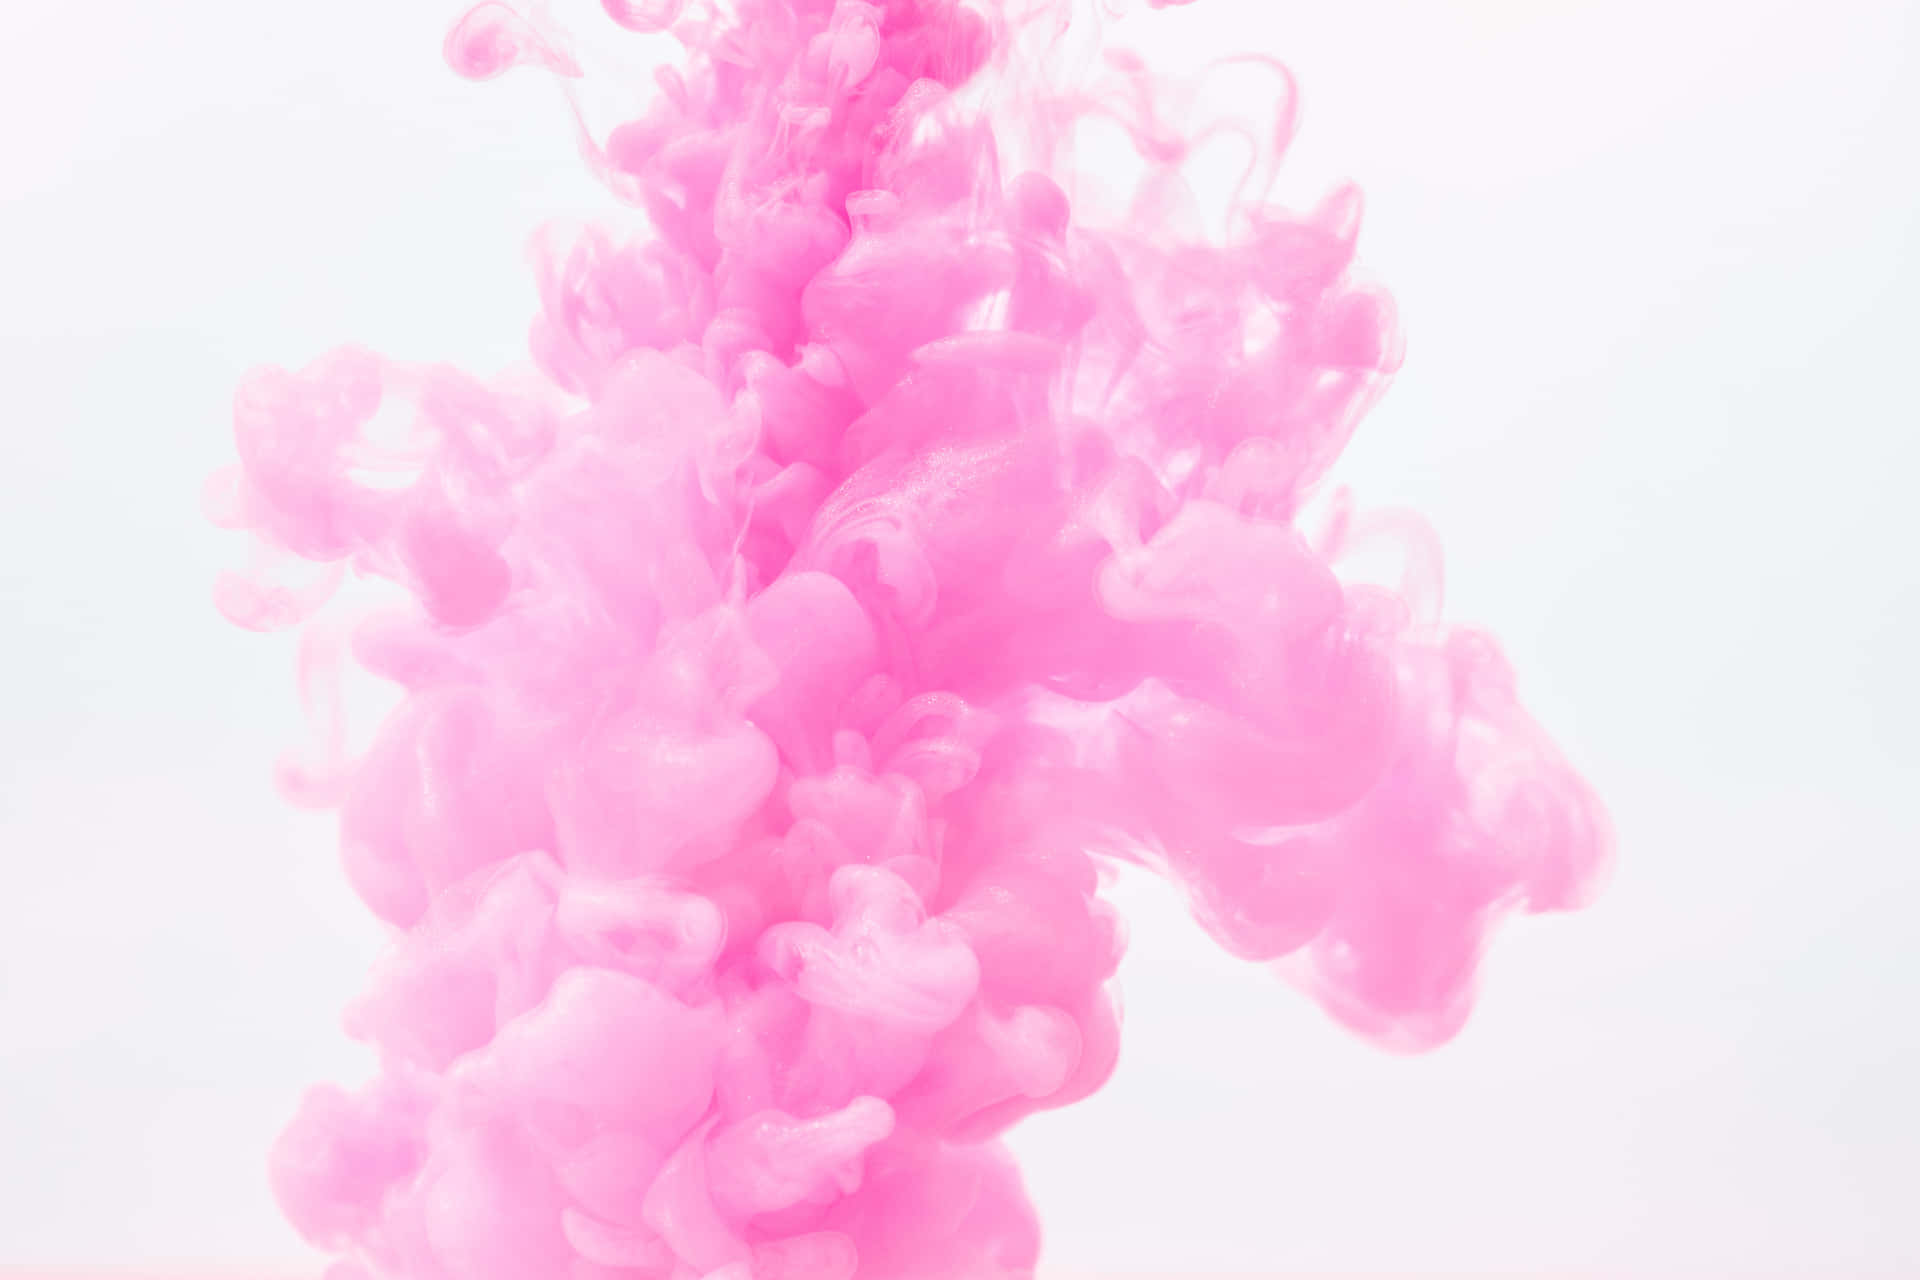 Magical swirling pink smoke